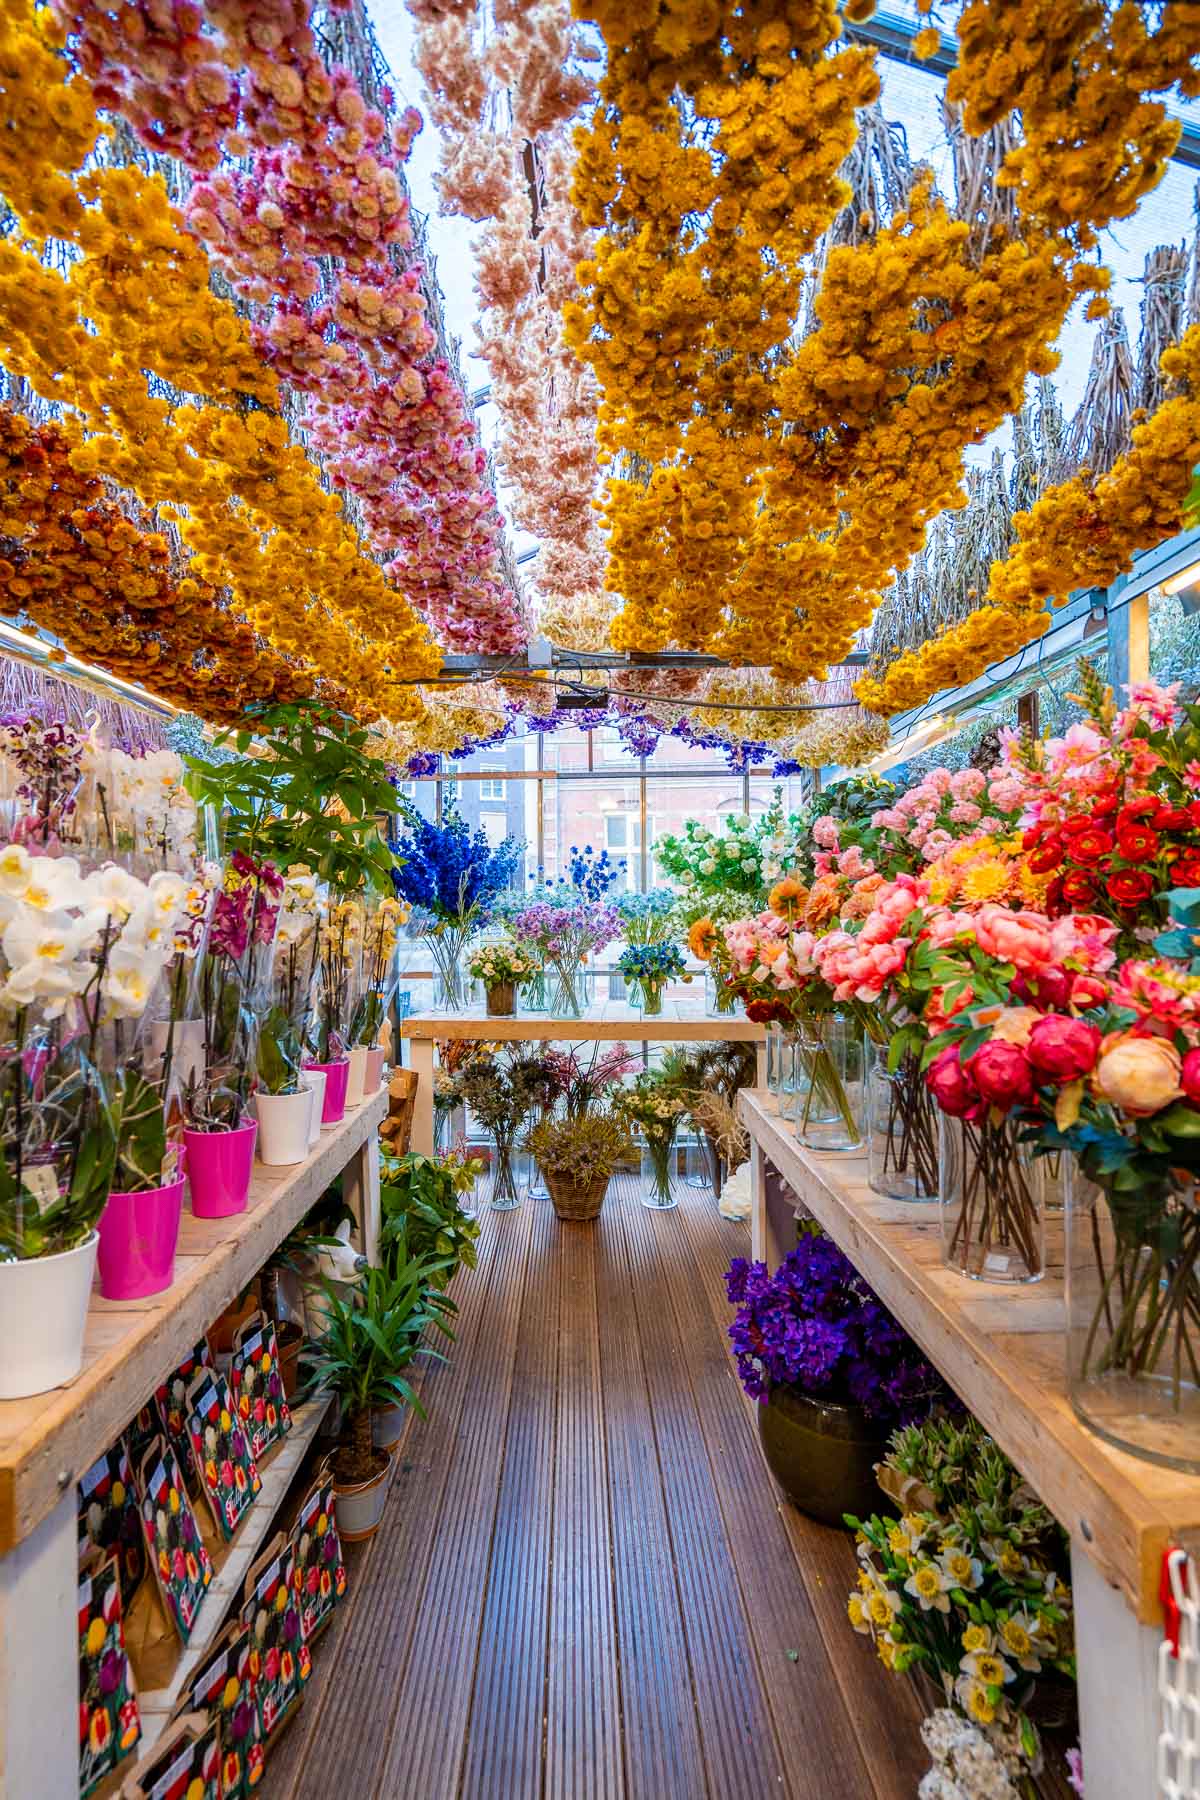 Beautifully arranged flowers at Bloemenmarkt Amsterdam